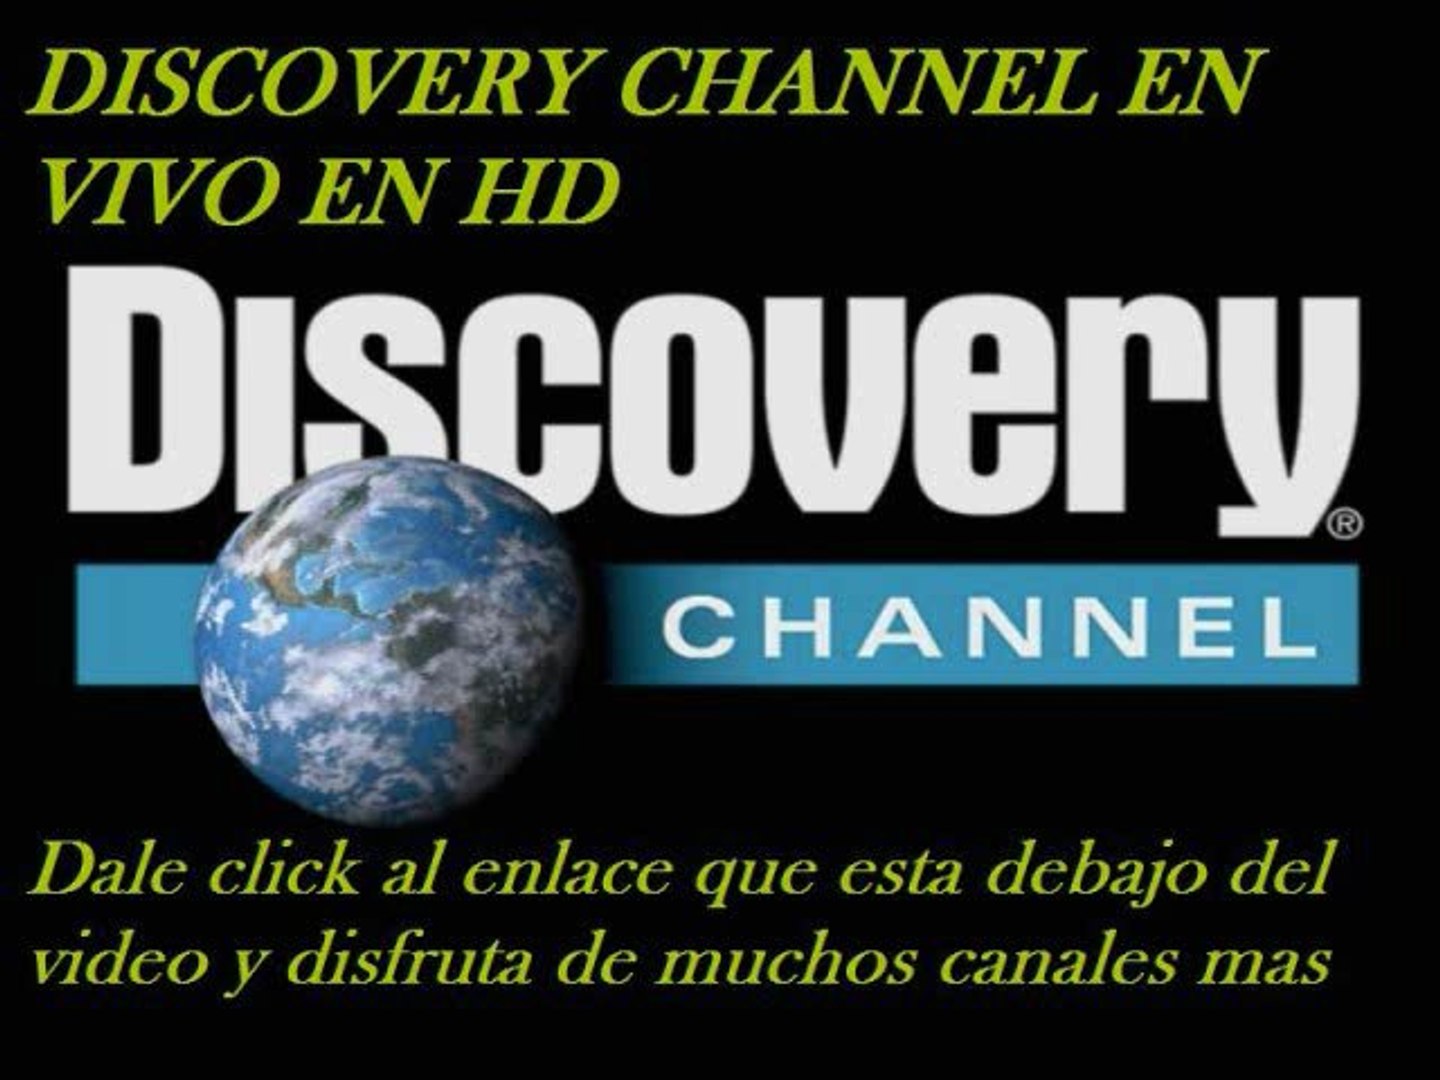 Покажи дискавери. Дискавери логотип. Дискавери канал. Телеканал Discovery channel. Логотип телеканала Discovery.